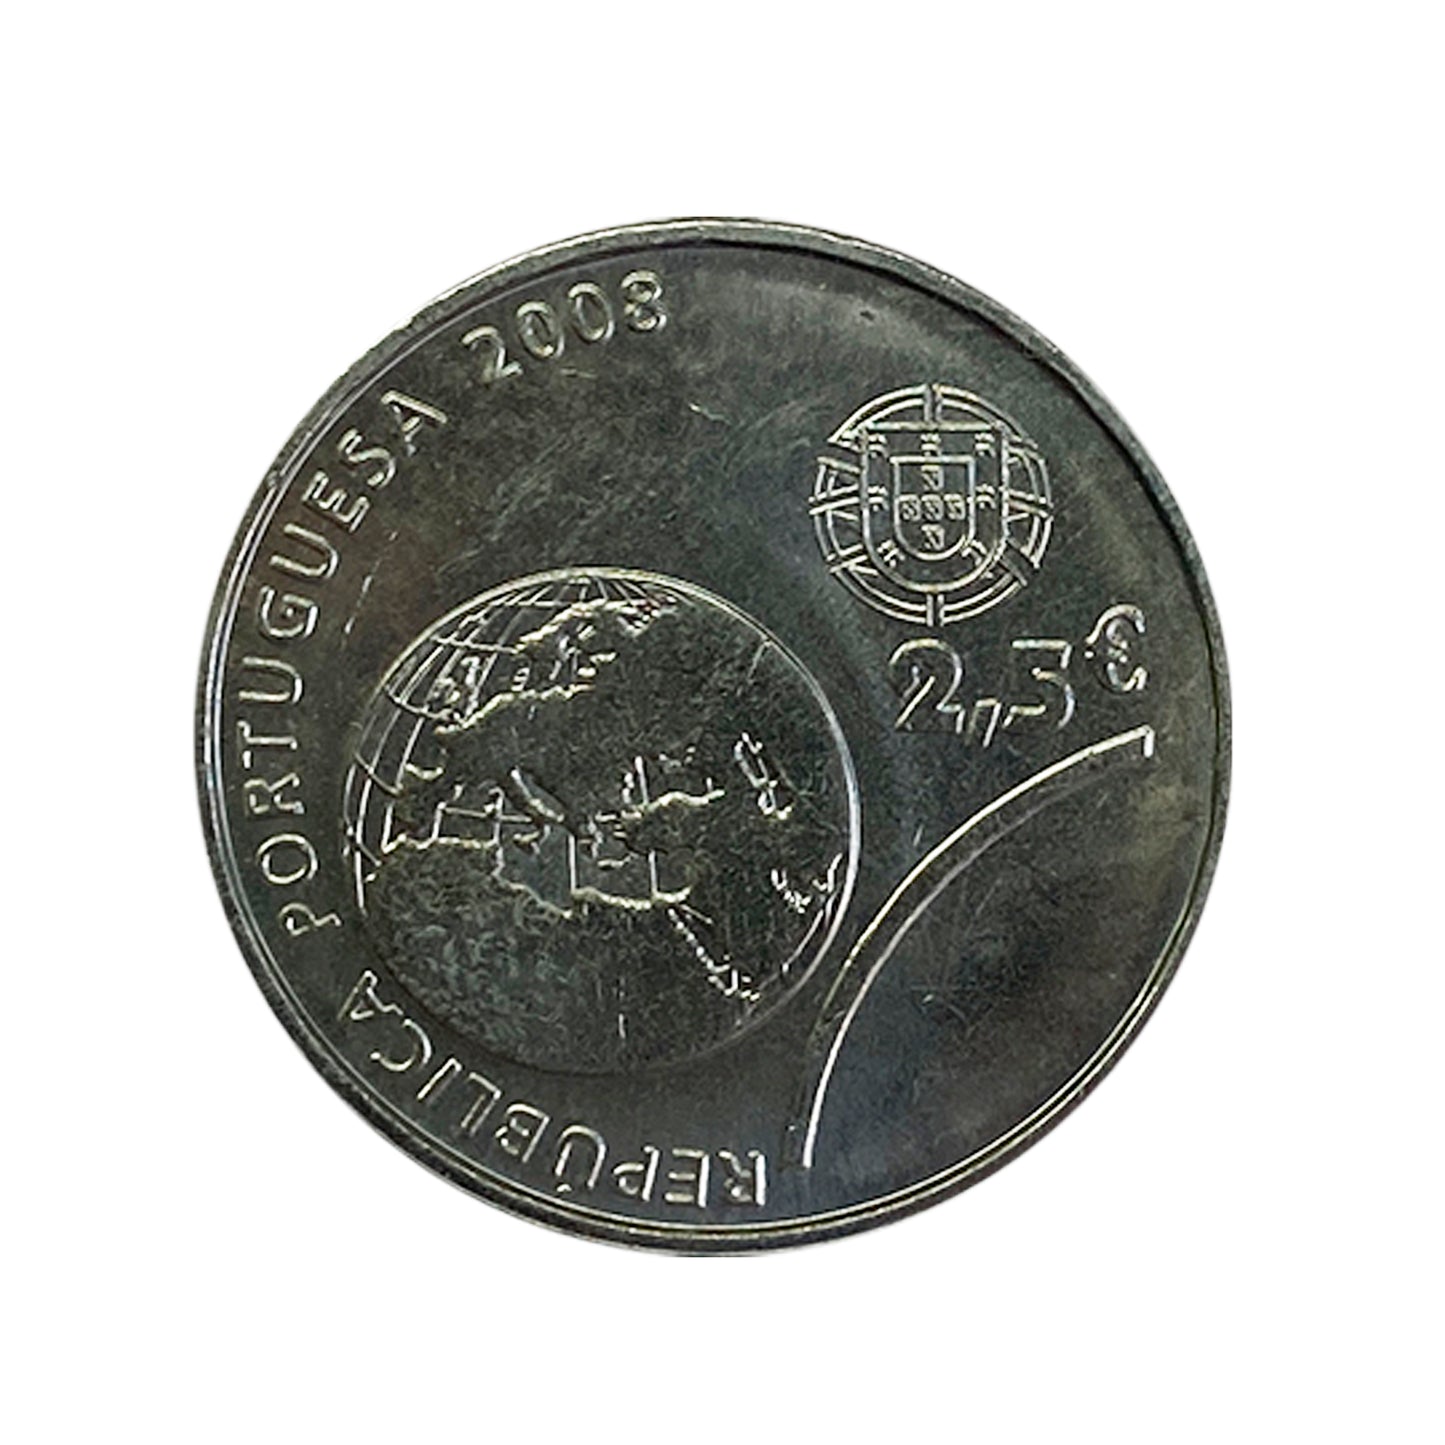 Portugal - Moneda 2,5 euros 2008 - Juegos Olímpicos Verano de Pekín